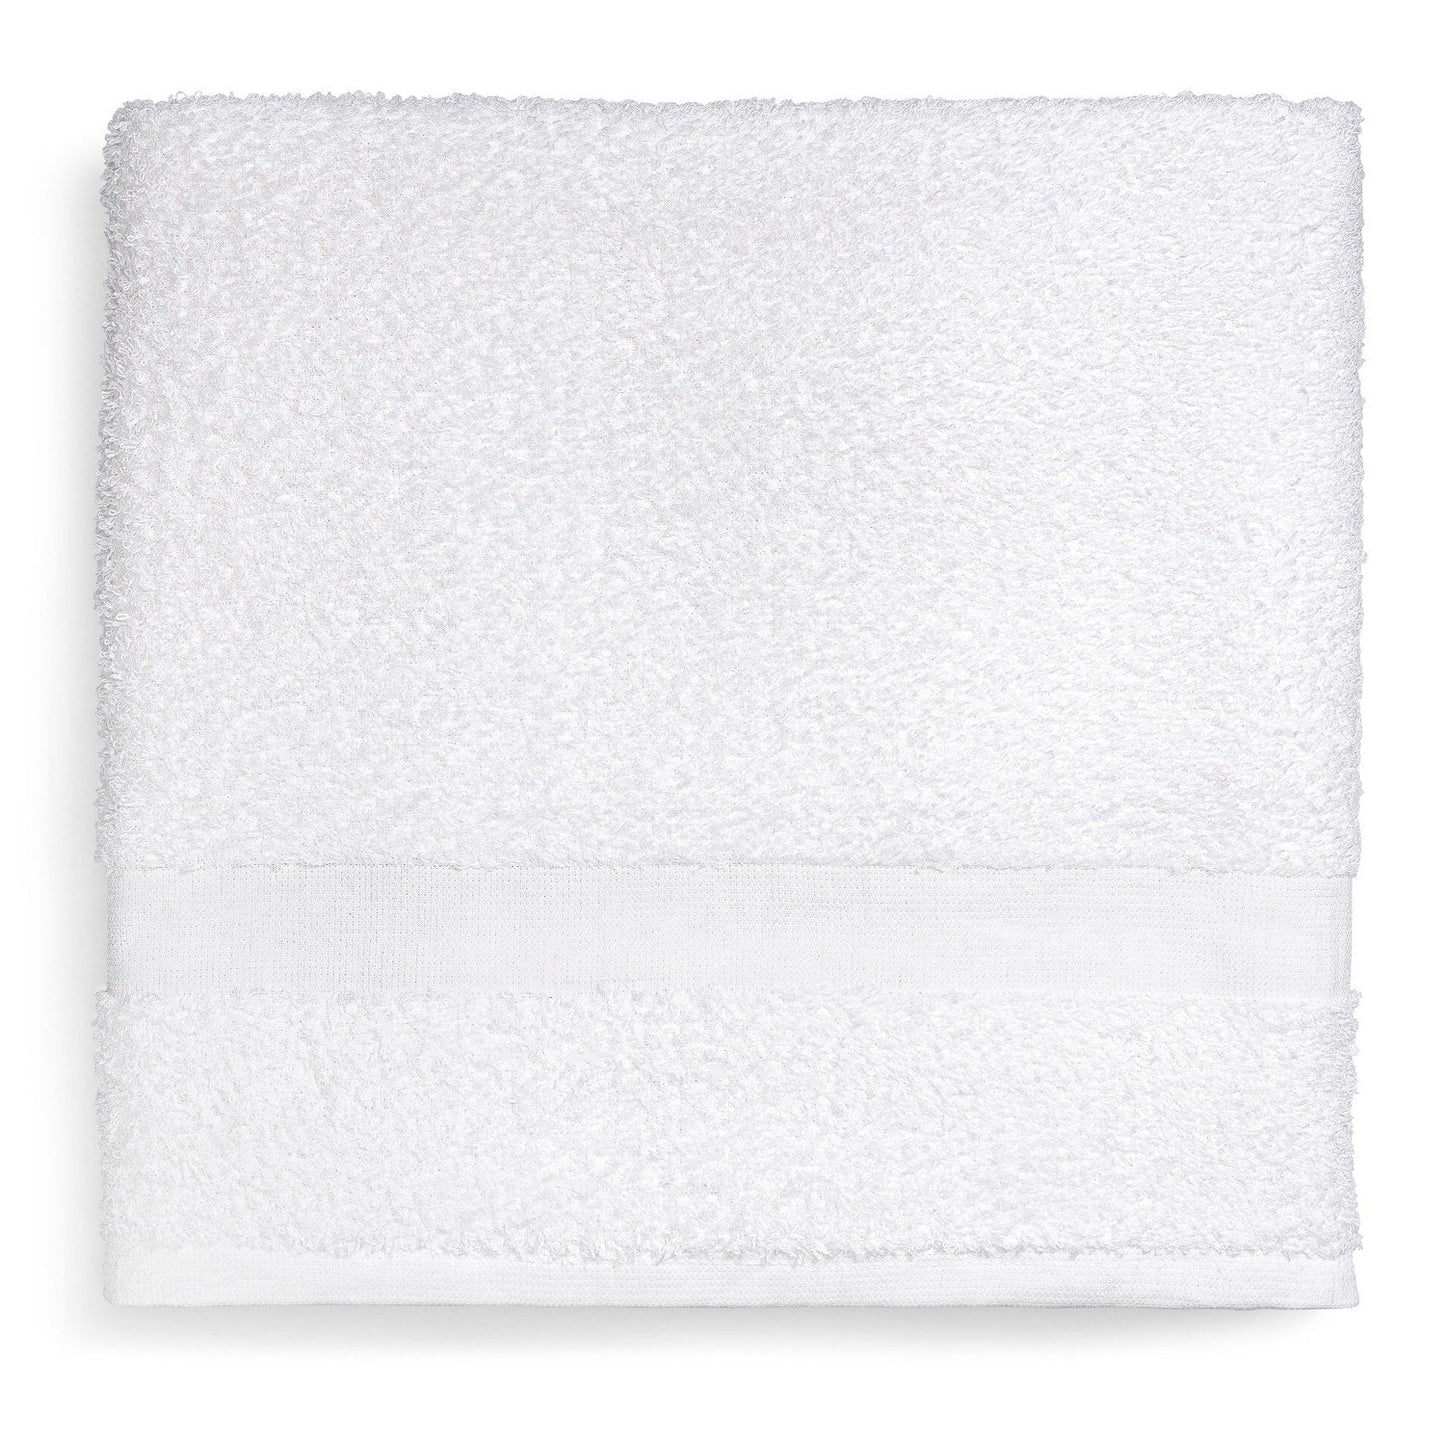 Premium Bath Towel, 24"x50"-10.5 LBS, 4 DZ/cs